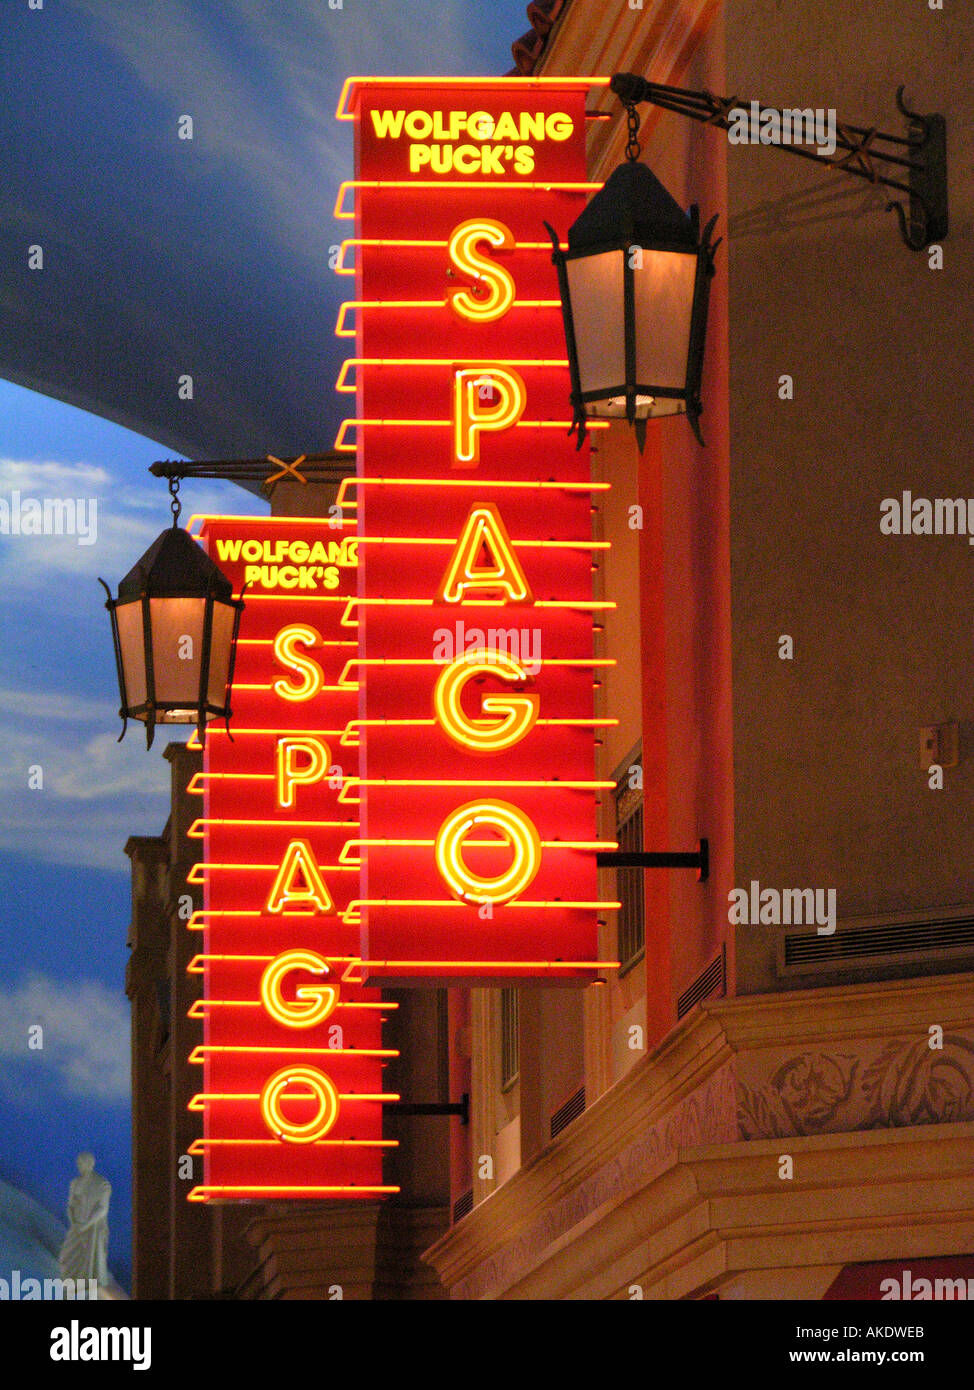 Las Vegas Nevada Las Vegas strip Caesars Palace Forum Shops Restaurants Wolfgang Puck Spago Restaurant Signs Stock Photo